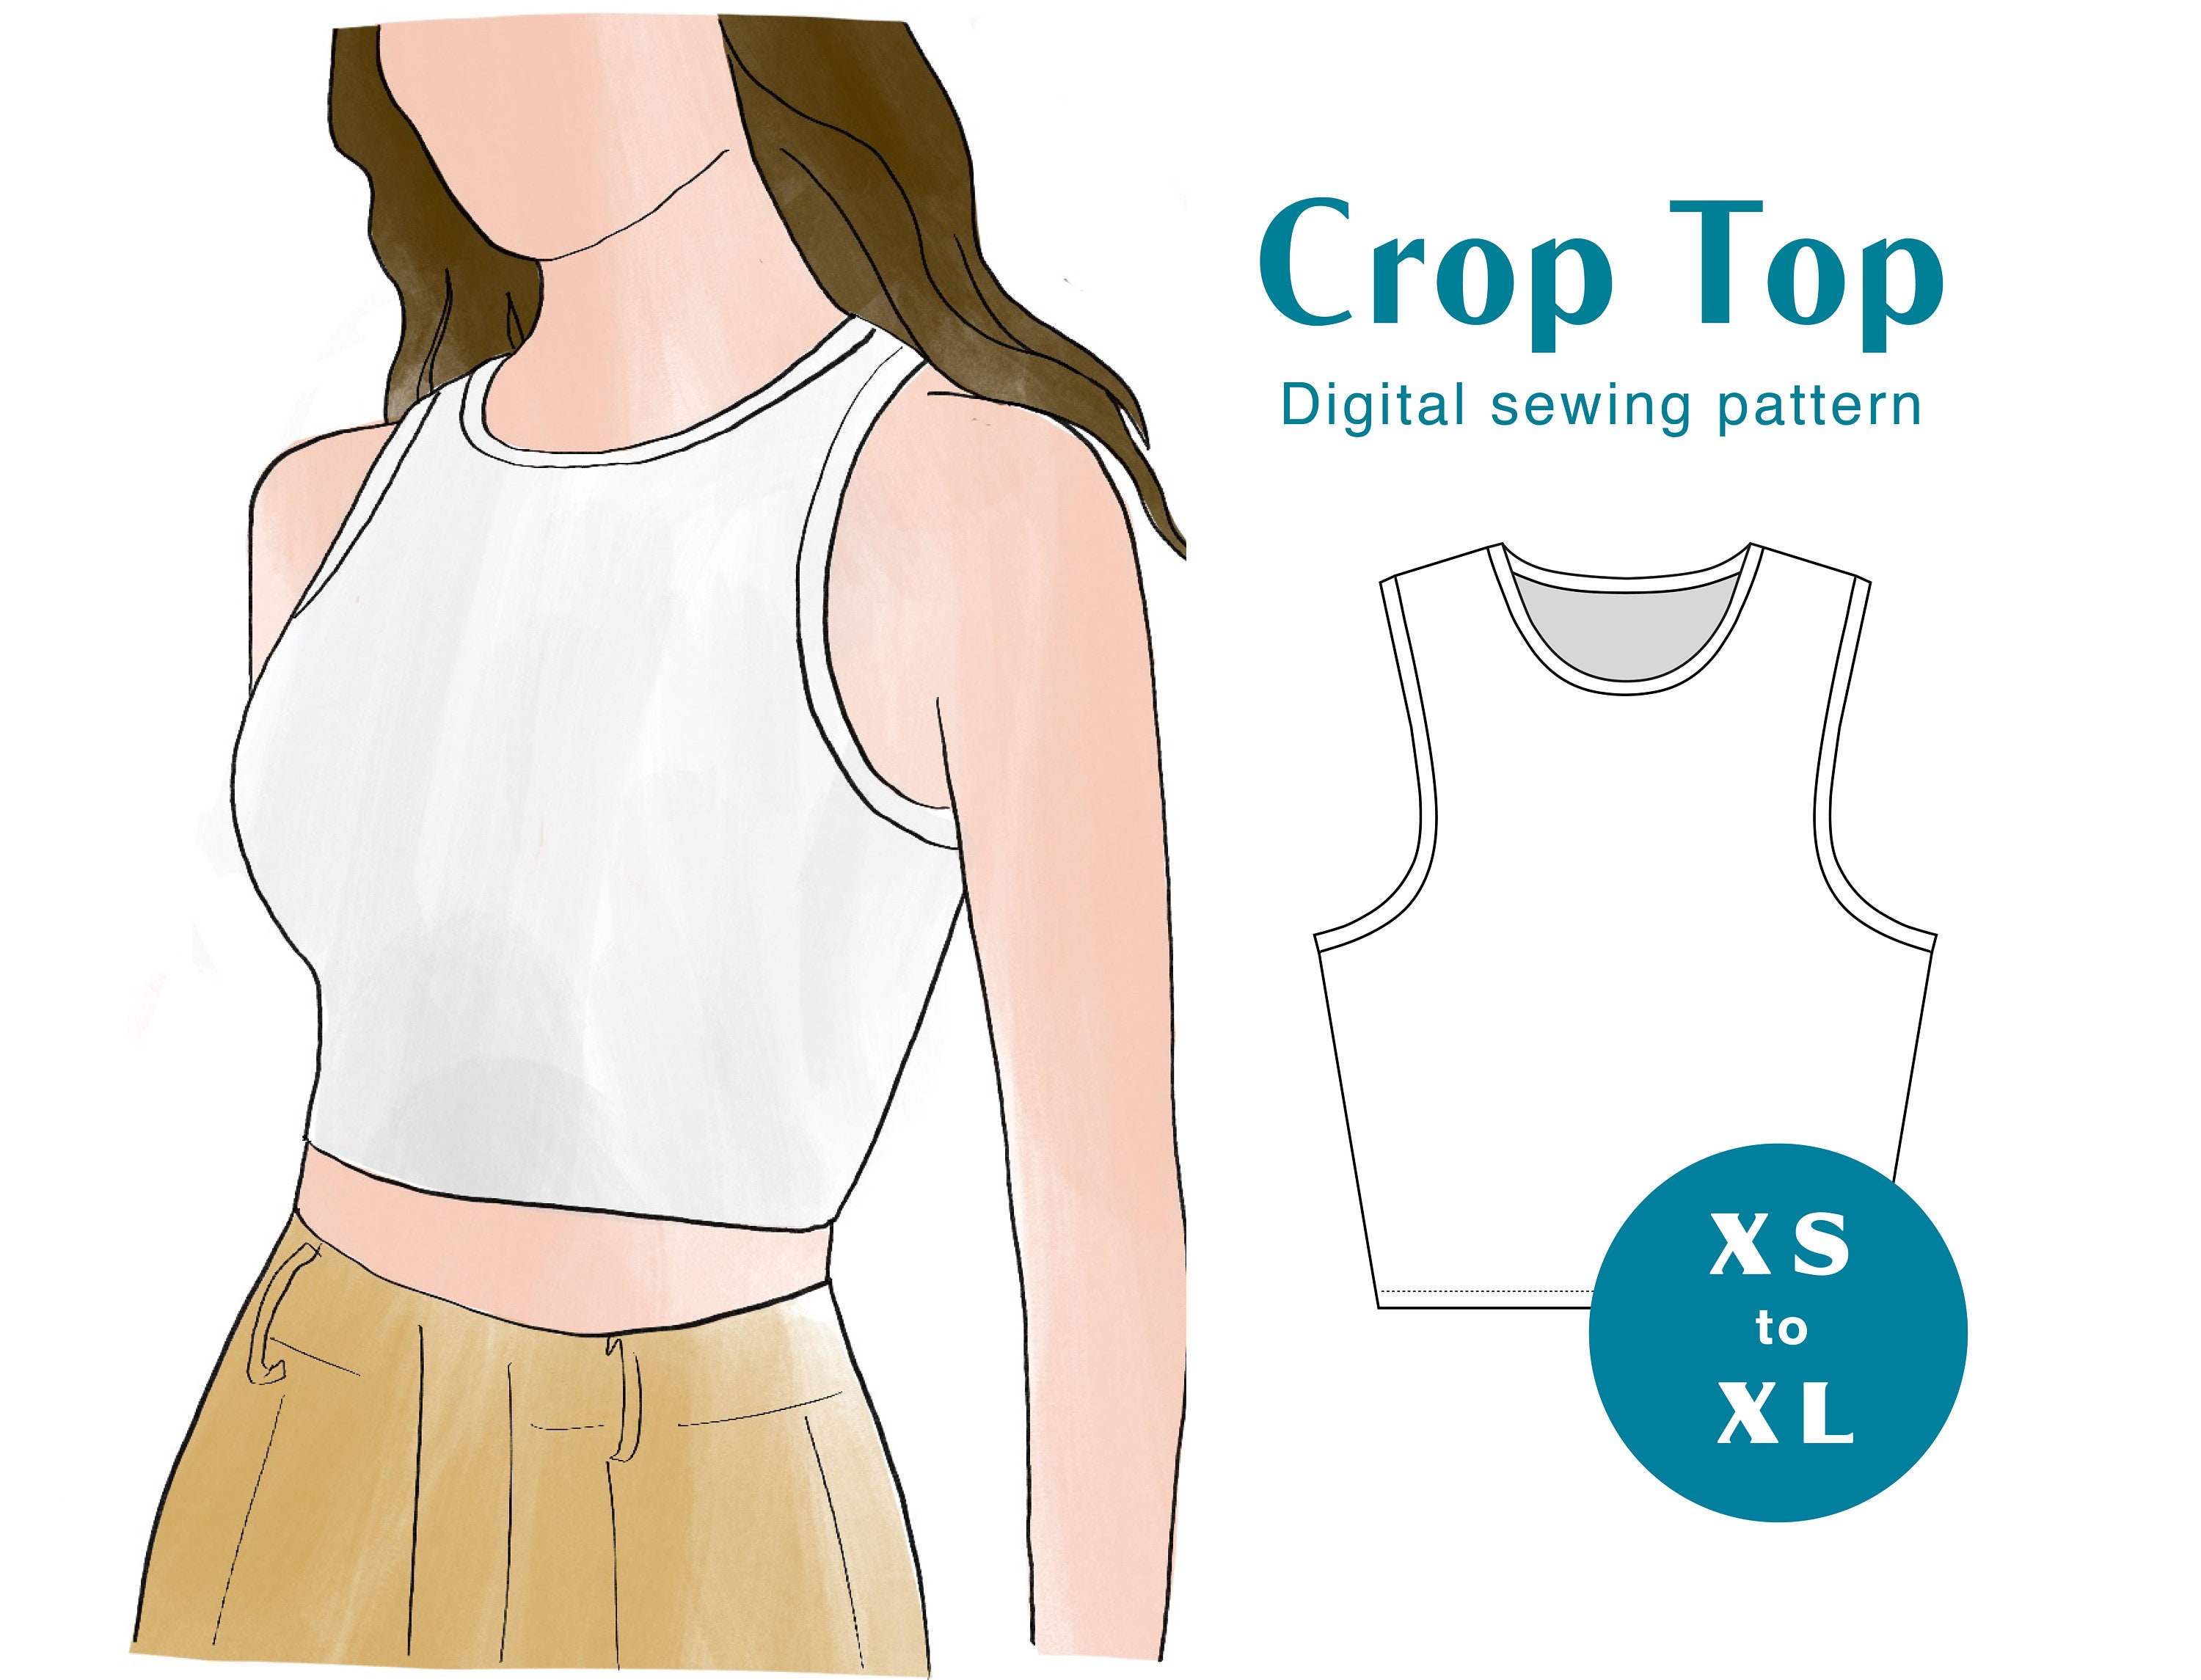 40+ FREE Crop Top Sewing Patterns